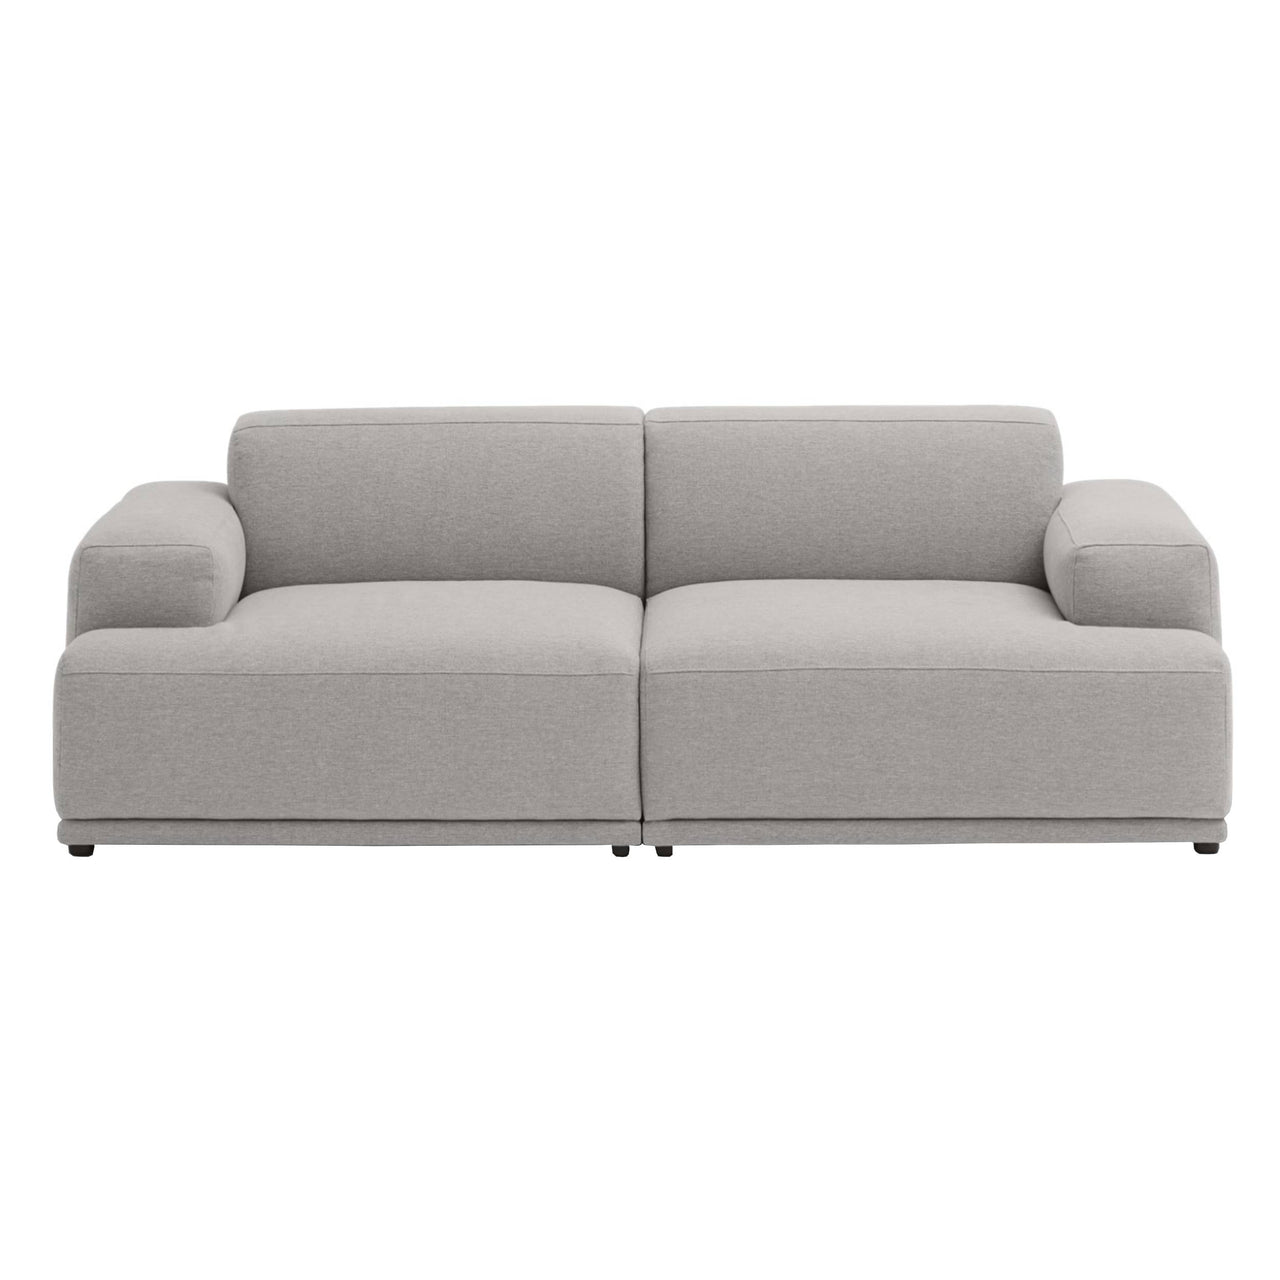 Connect Soft Modular Sofa: 2 Seater + Configuration 1